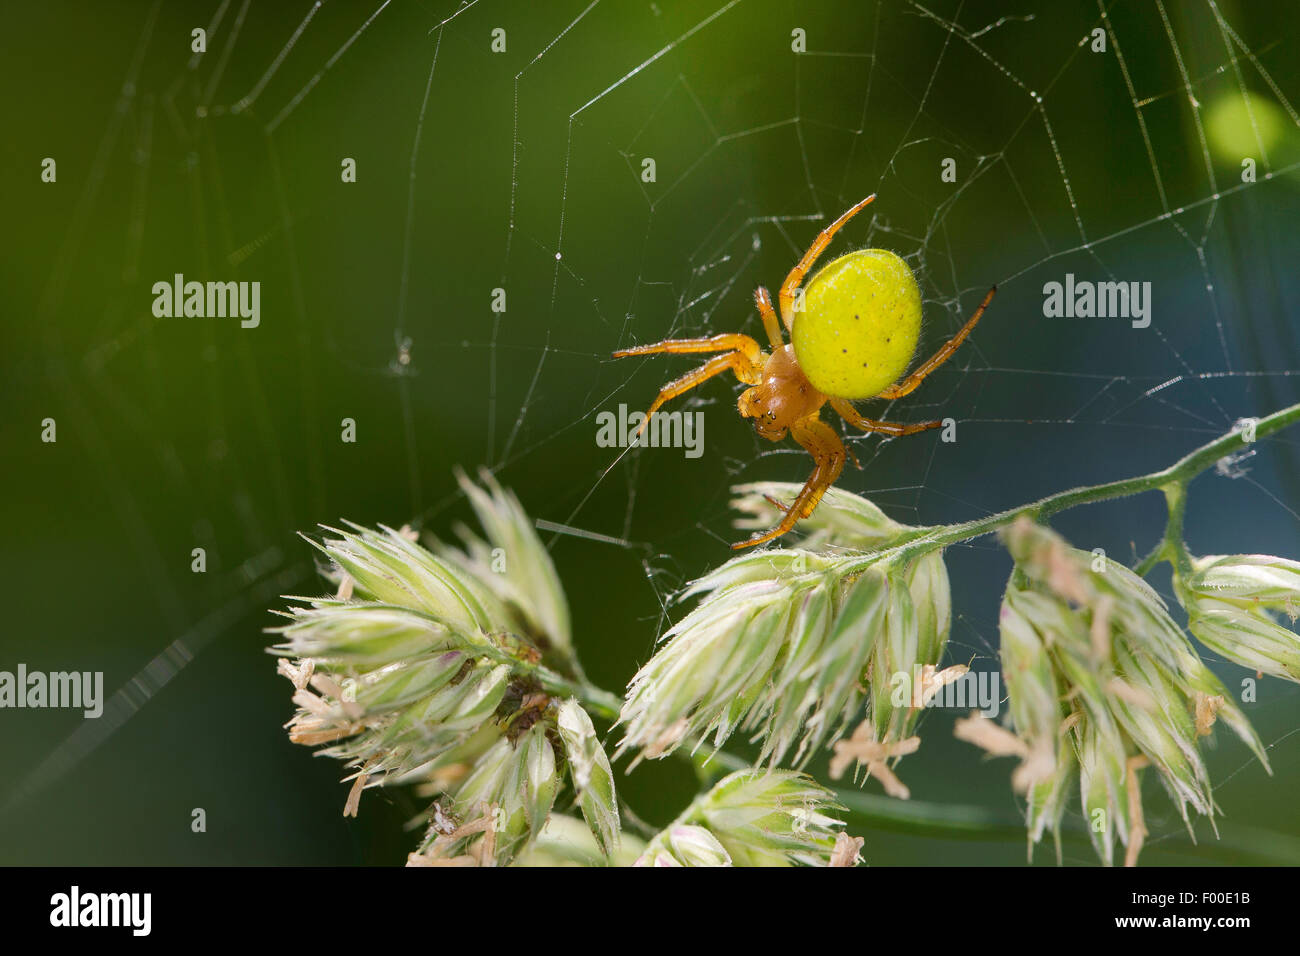 Gourd spider, Pumpkin spider (Araniella cucurbitina oder Araniella opistographa), in its web at grass ears, Germany Stock Photo